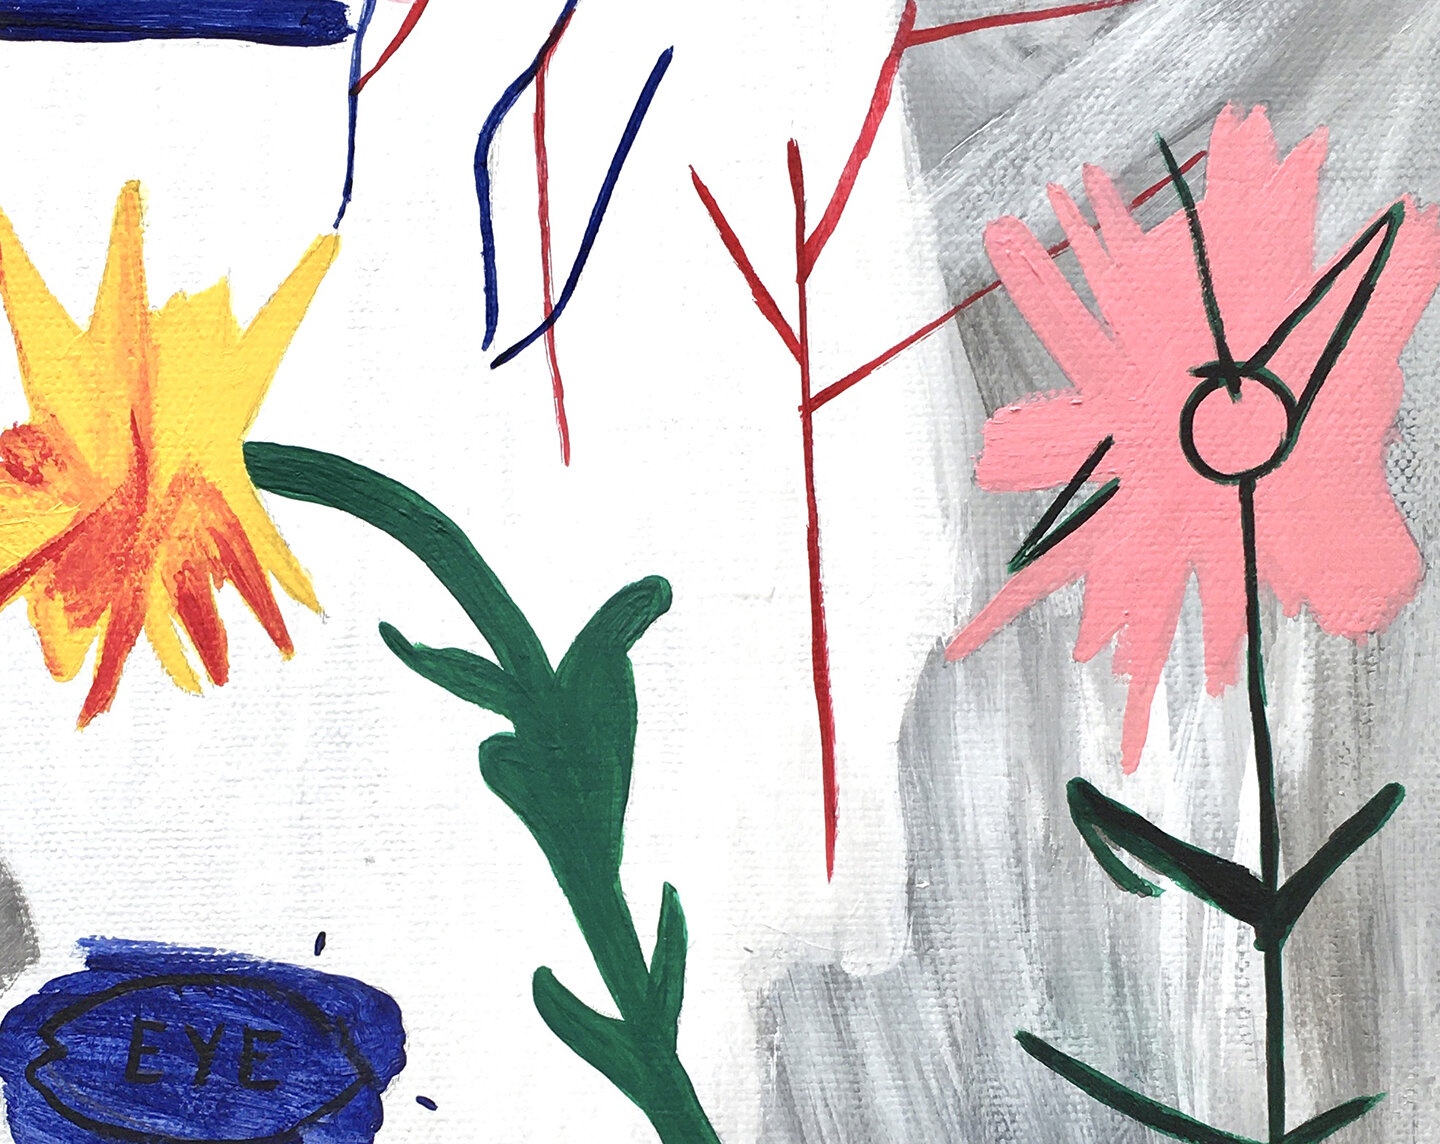 2020 Basquiat paints like a child 14x11 detail.jpg